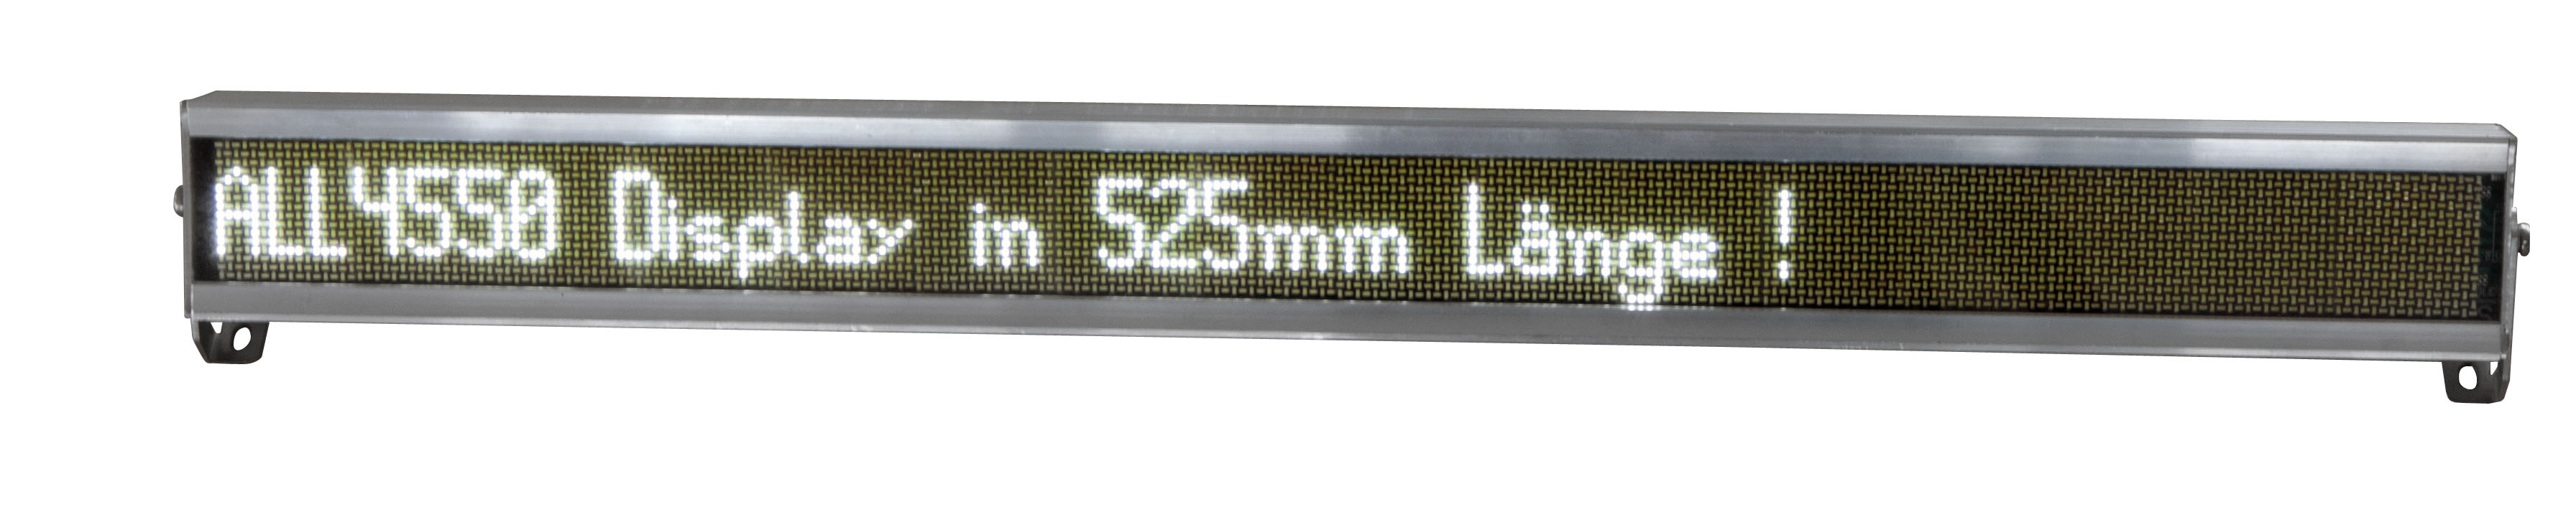 ALL4550 / PoE LED-Display L13 3328mm